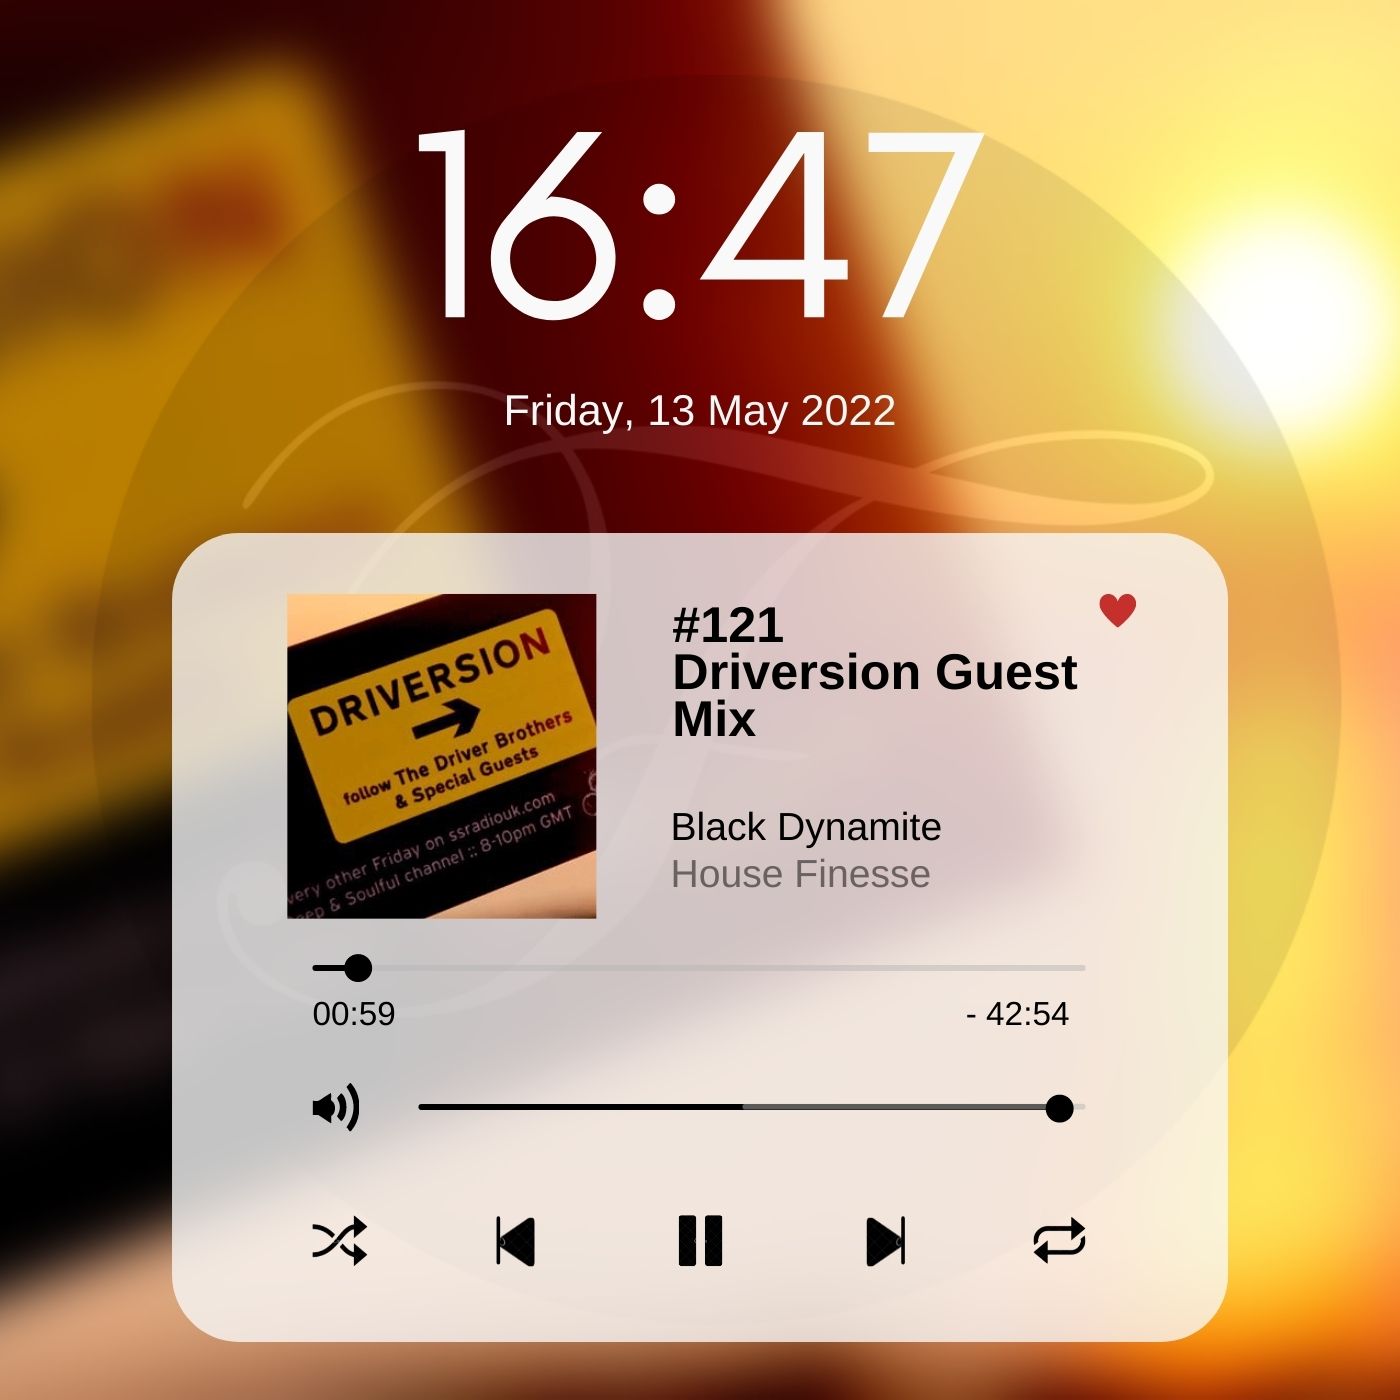 Driversion Guest Mix by Black Dynamite